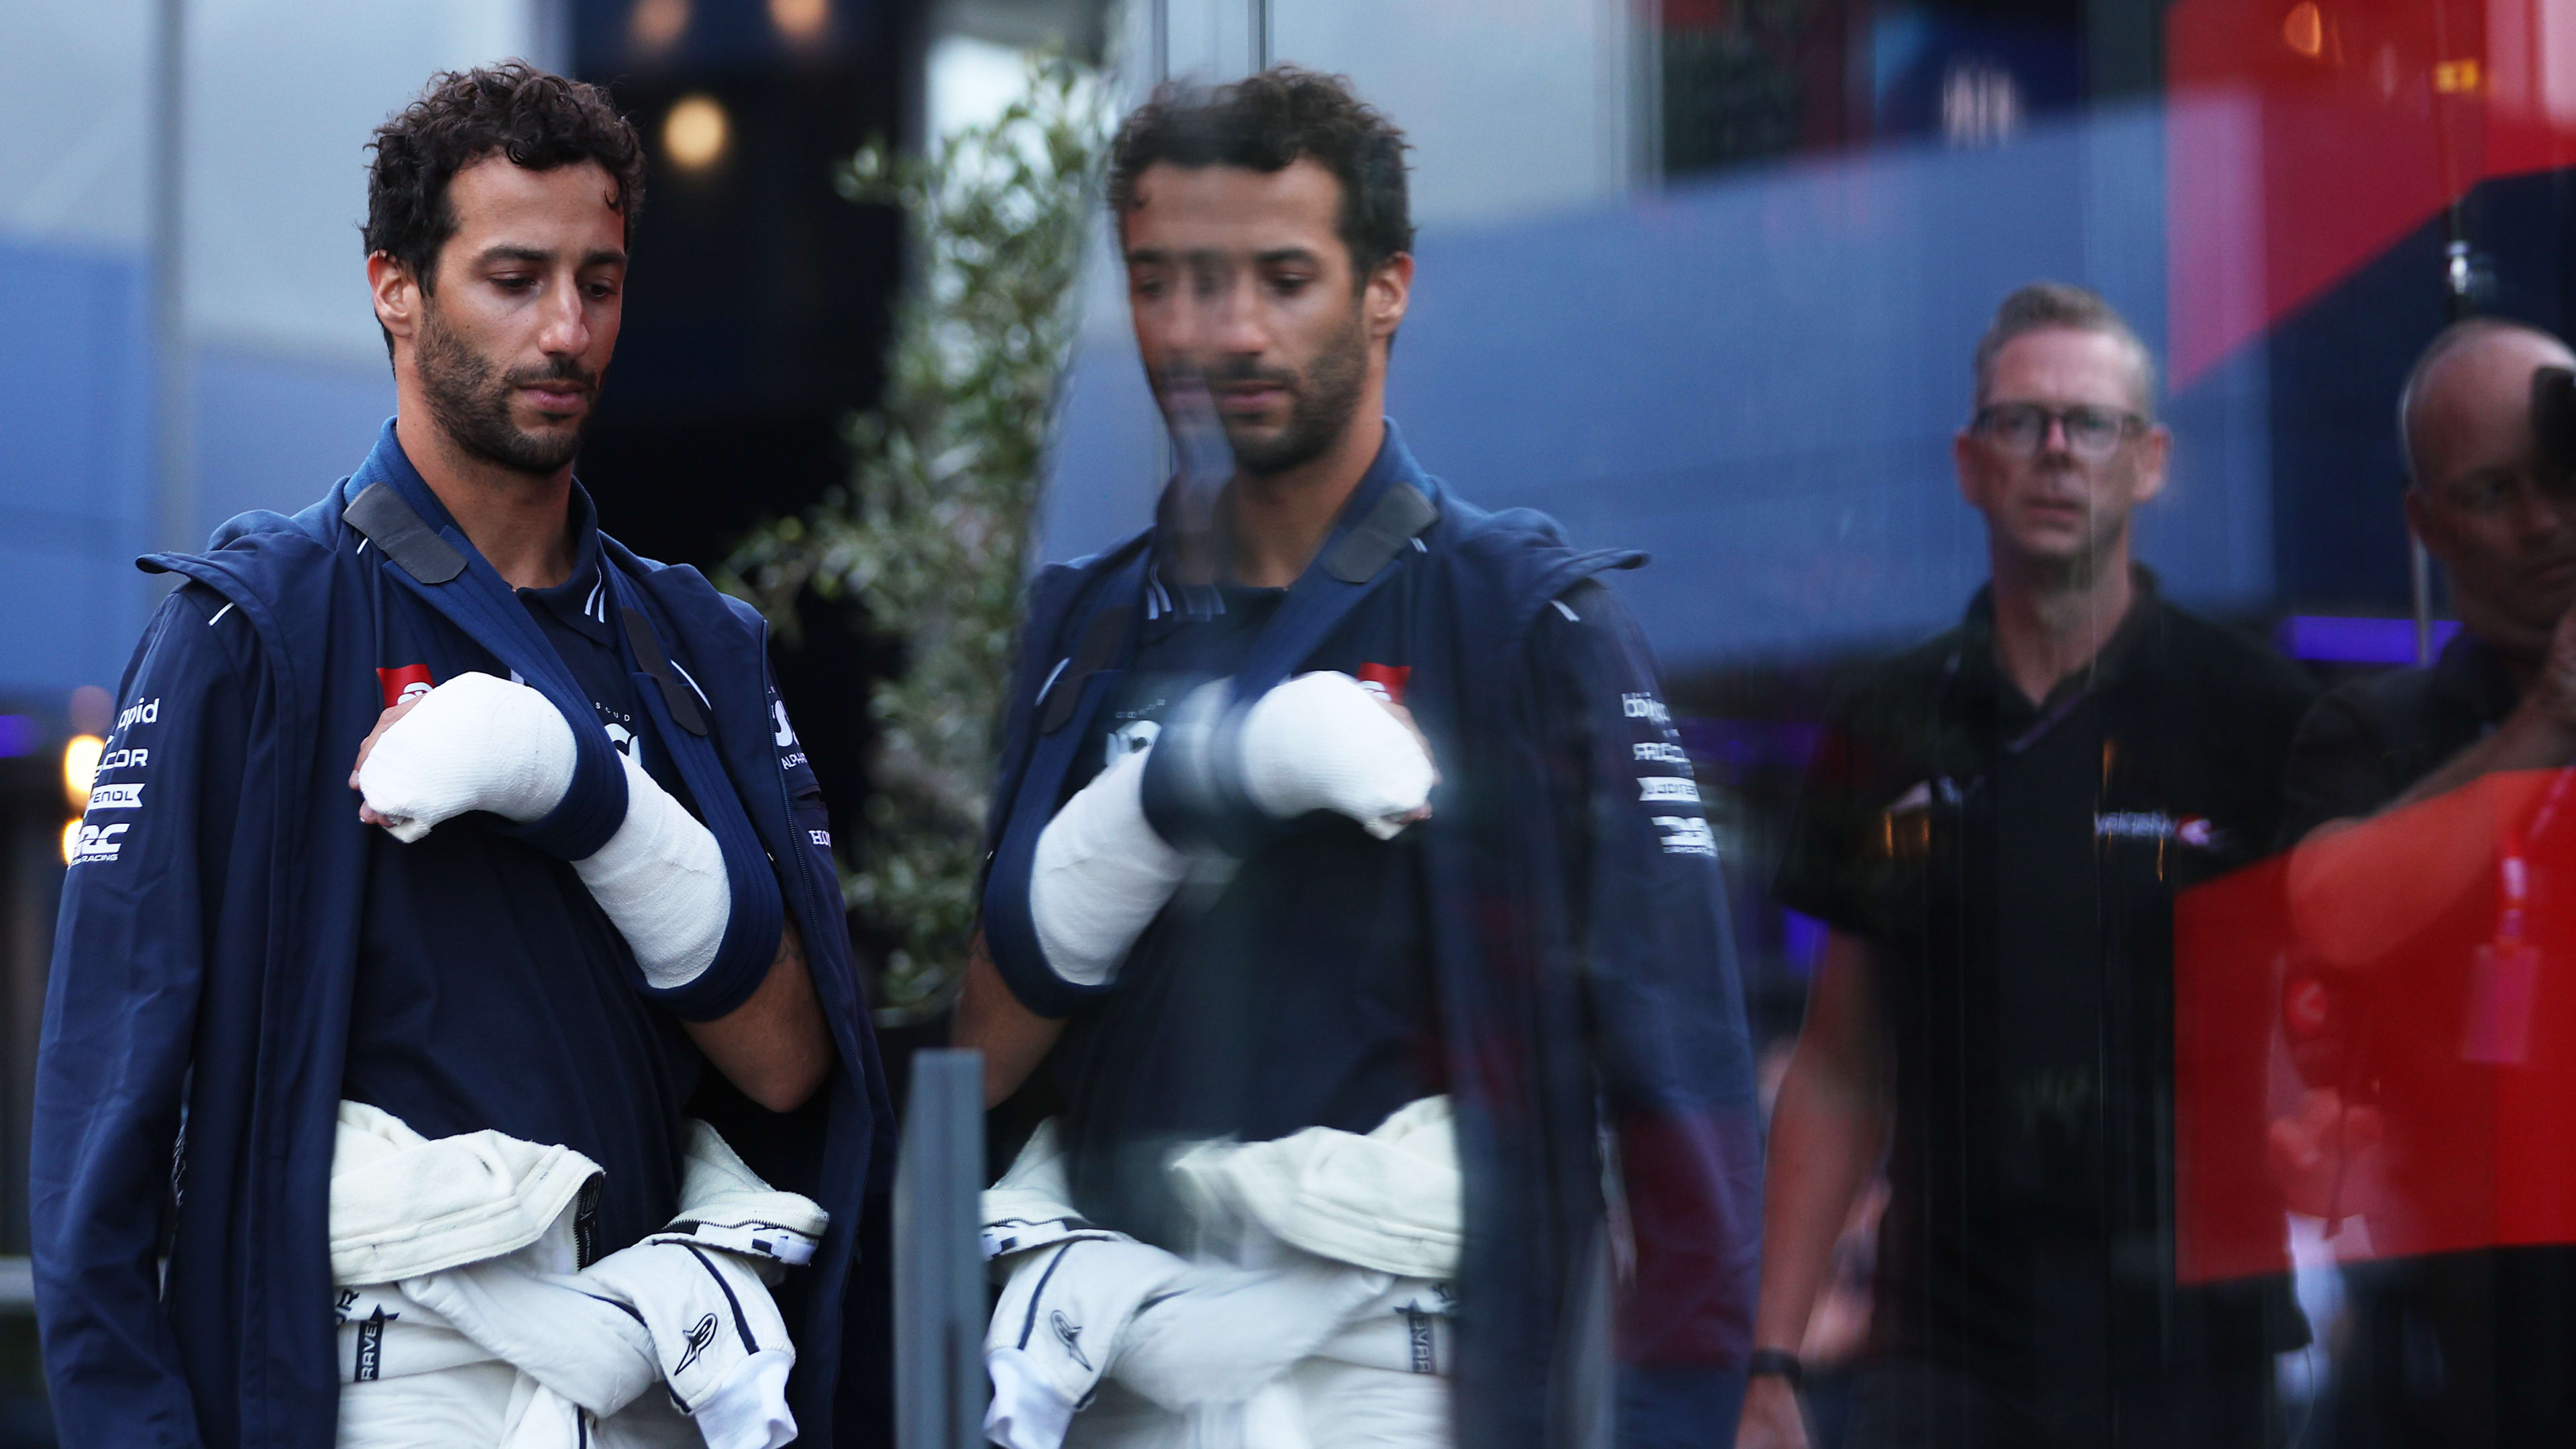 ZANDVOORT, NETHERLANDS - AUGUST 25: Daniel Ricciardo of Australia and Scuderia AlphaTauri wears a